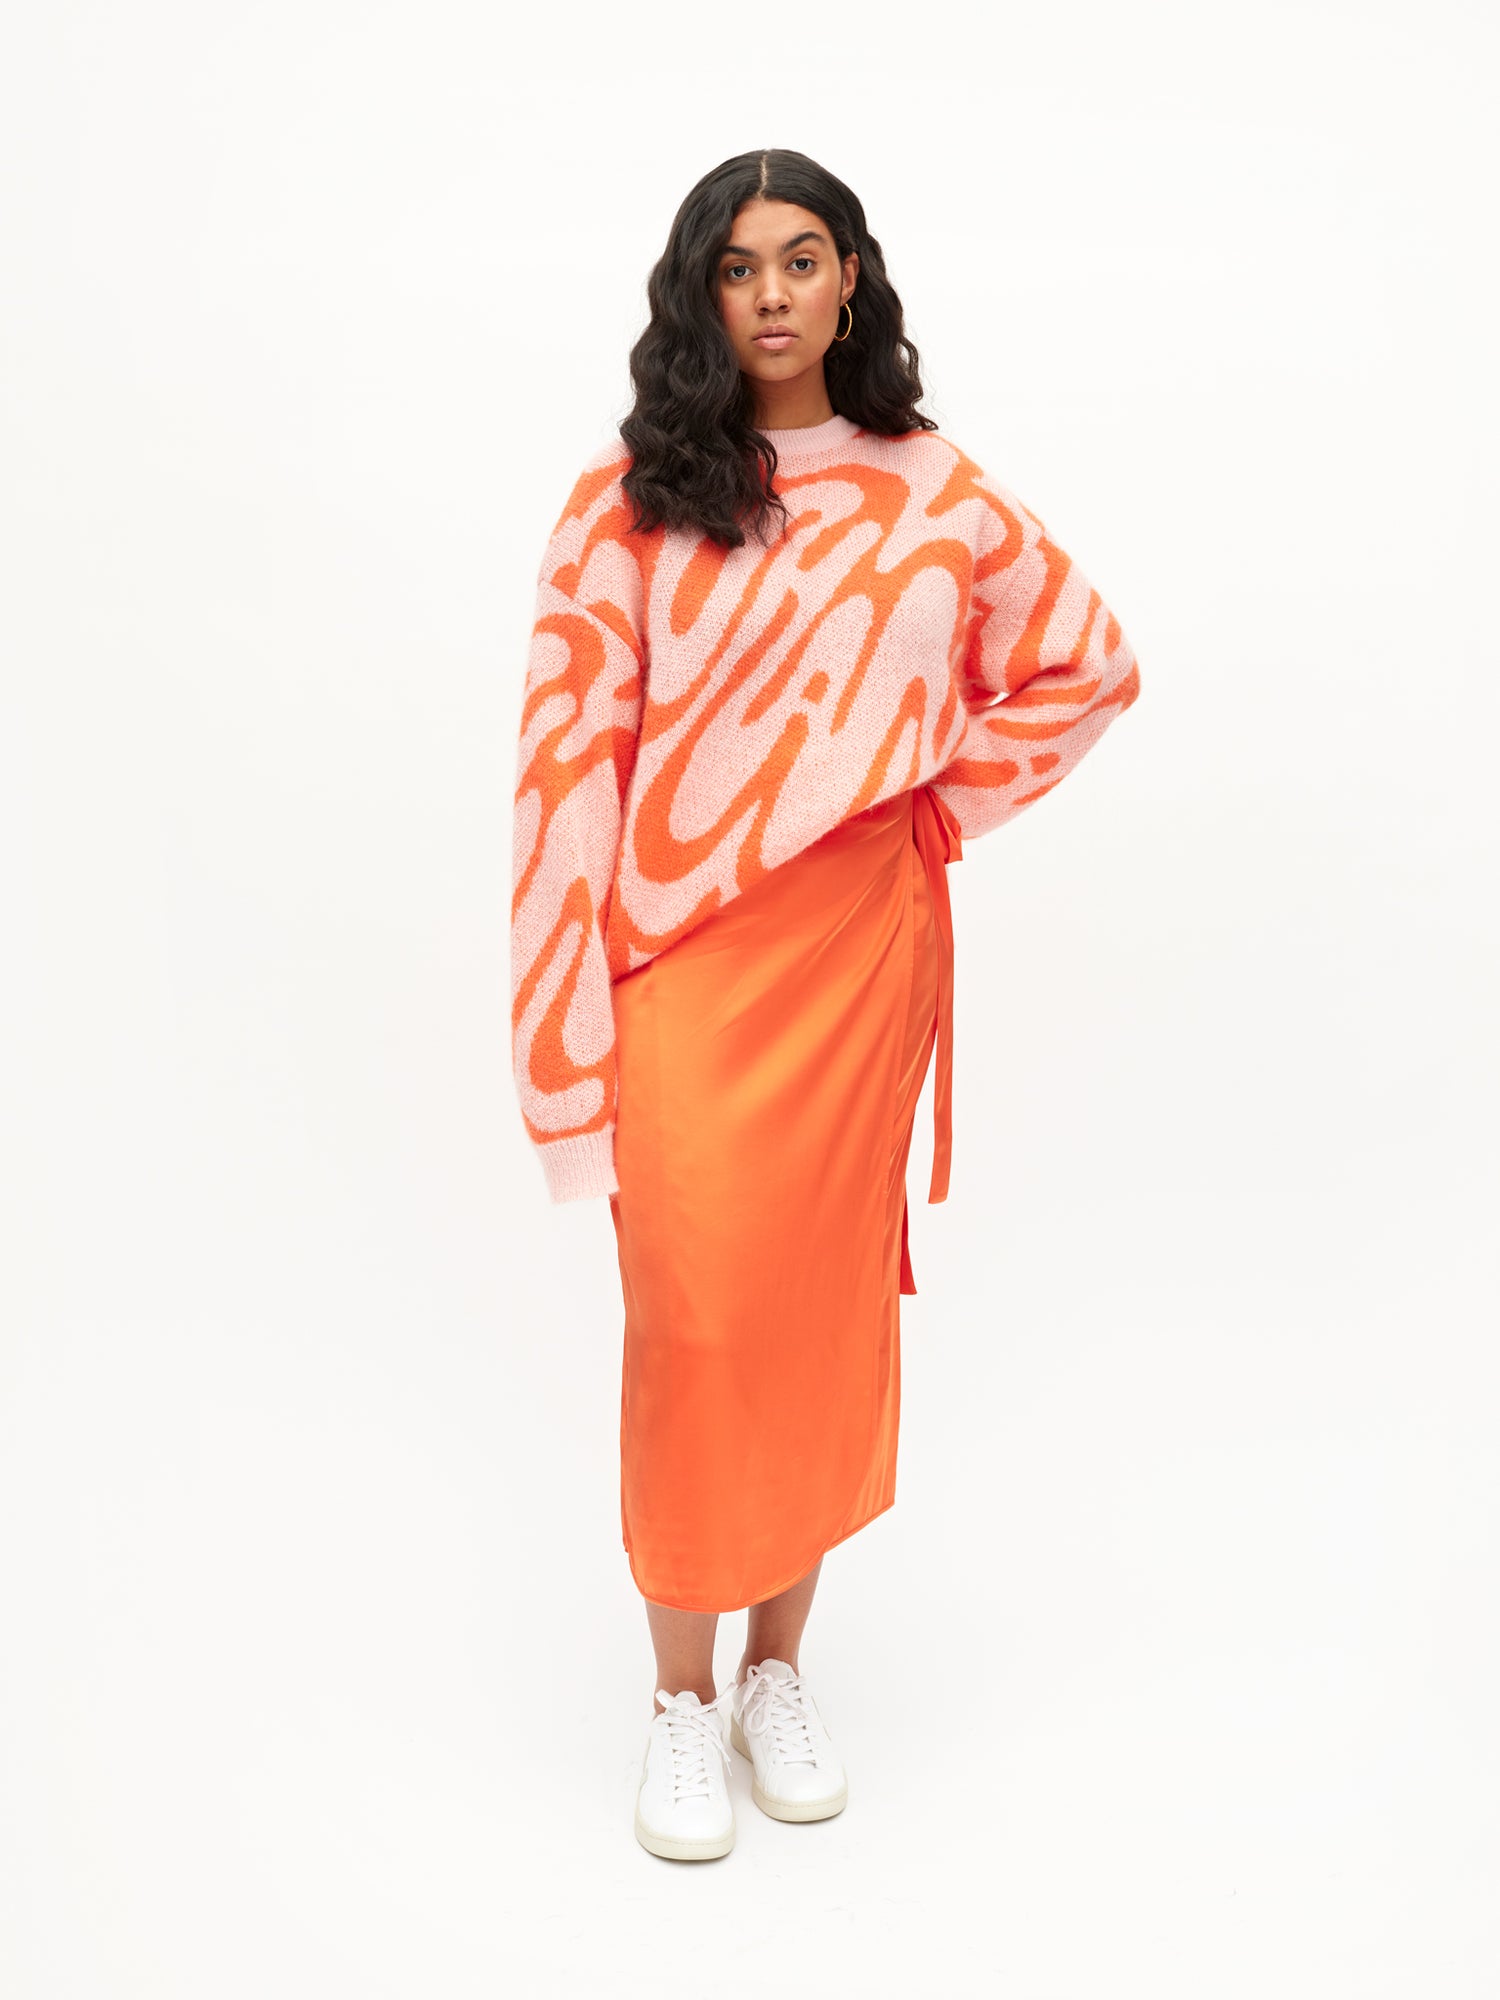 Uhana - Accept Jumper , Surreal & Pihla Skirt, Vibrant Orange2